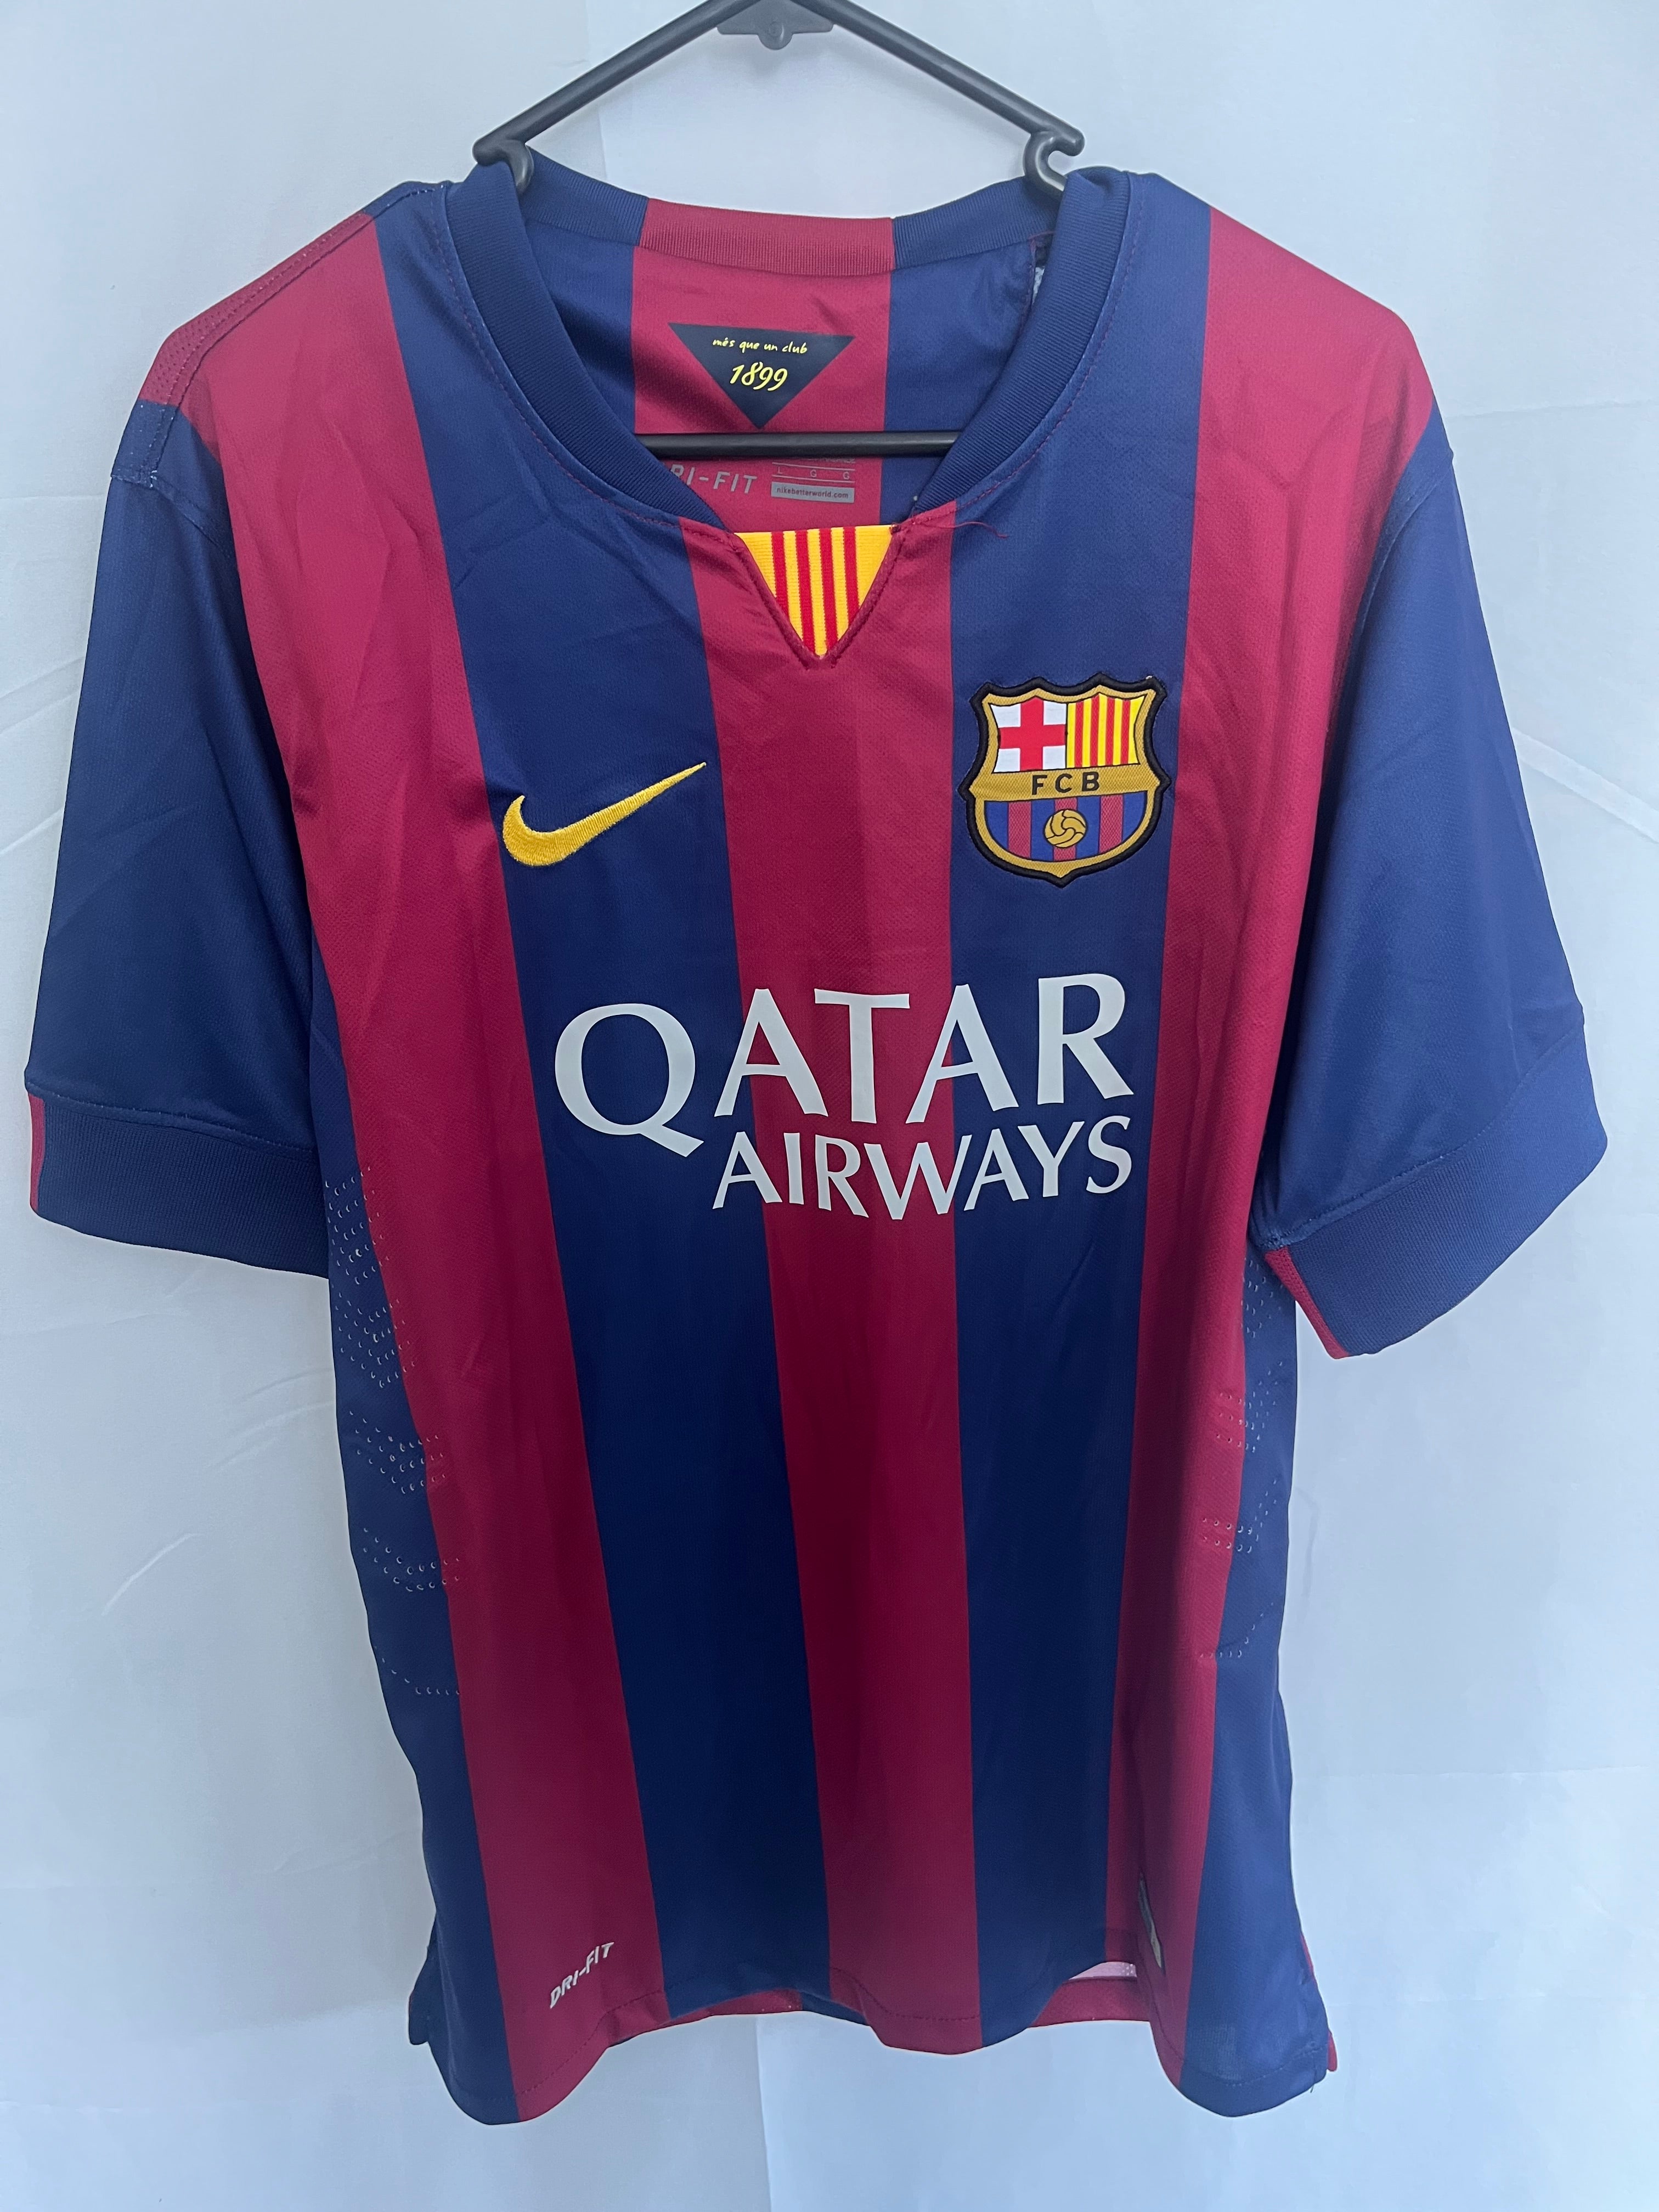 Signed Neymar Jr Barcelona 2014/2015 Retro Shirt